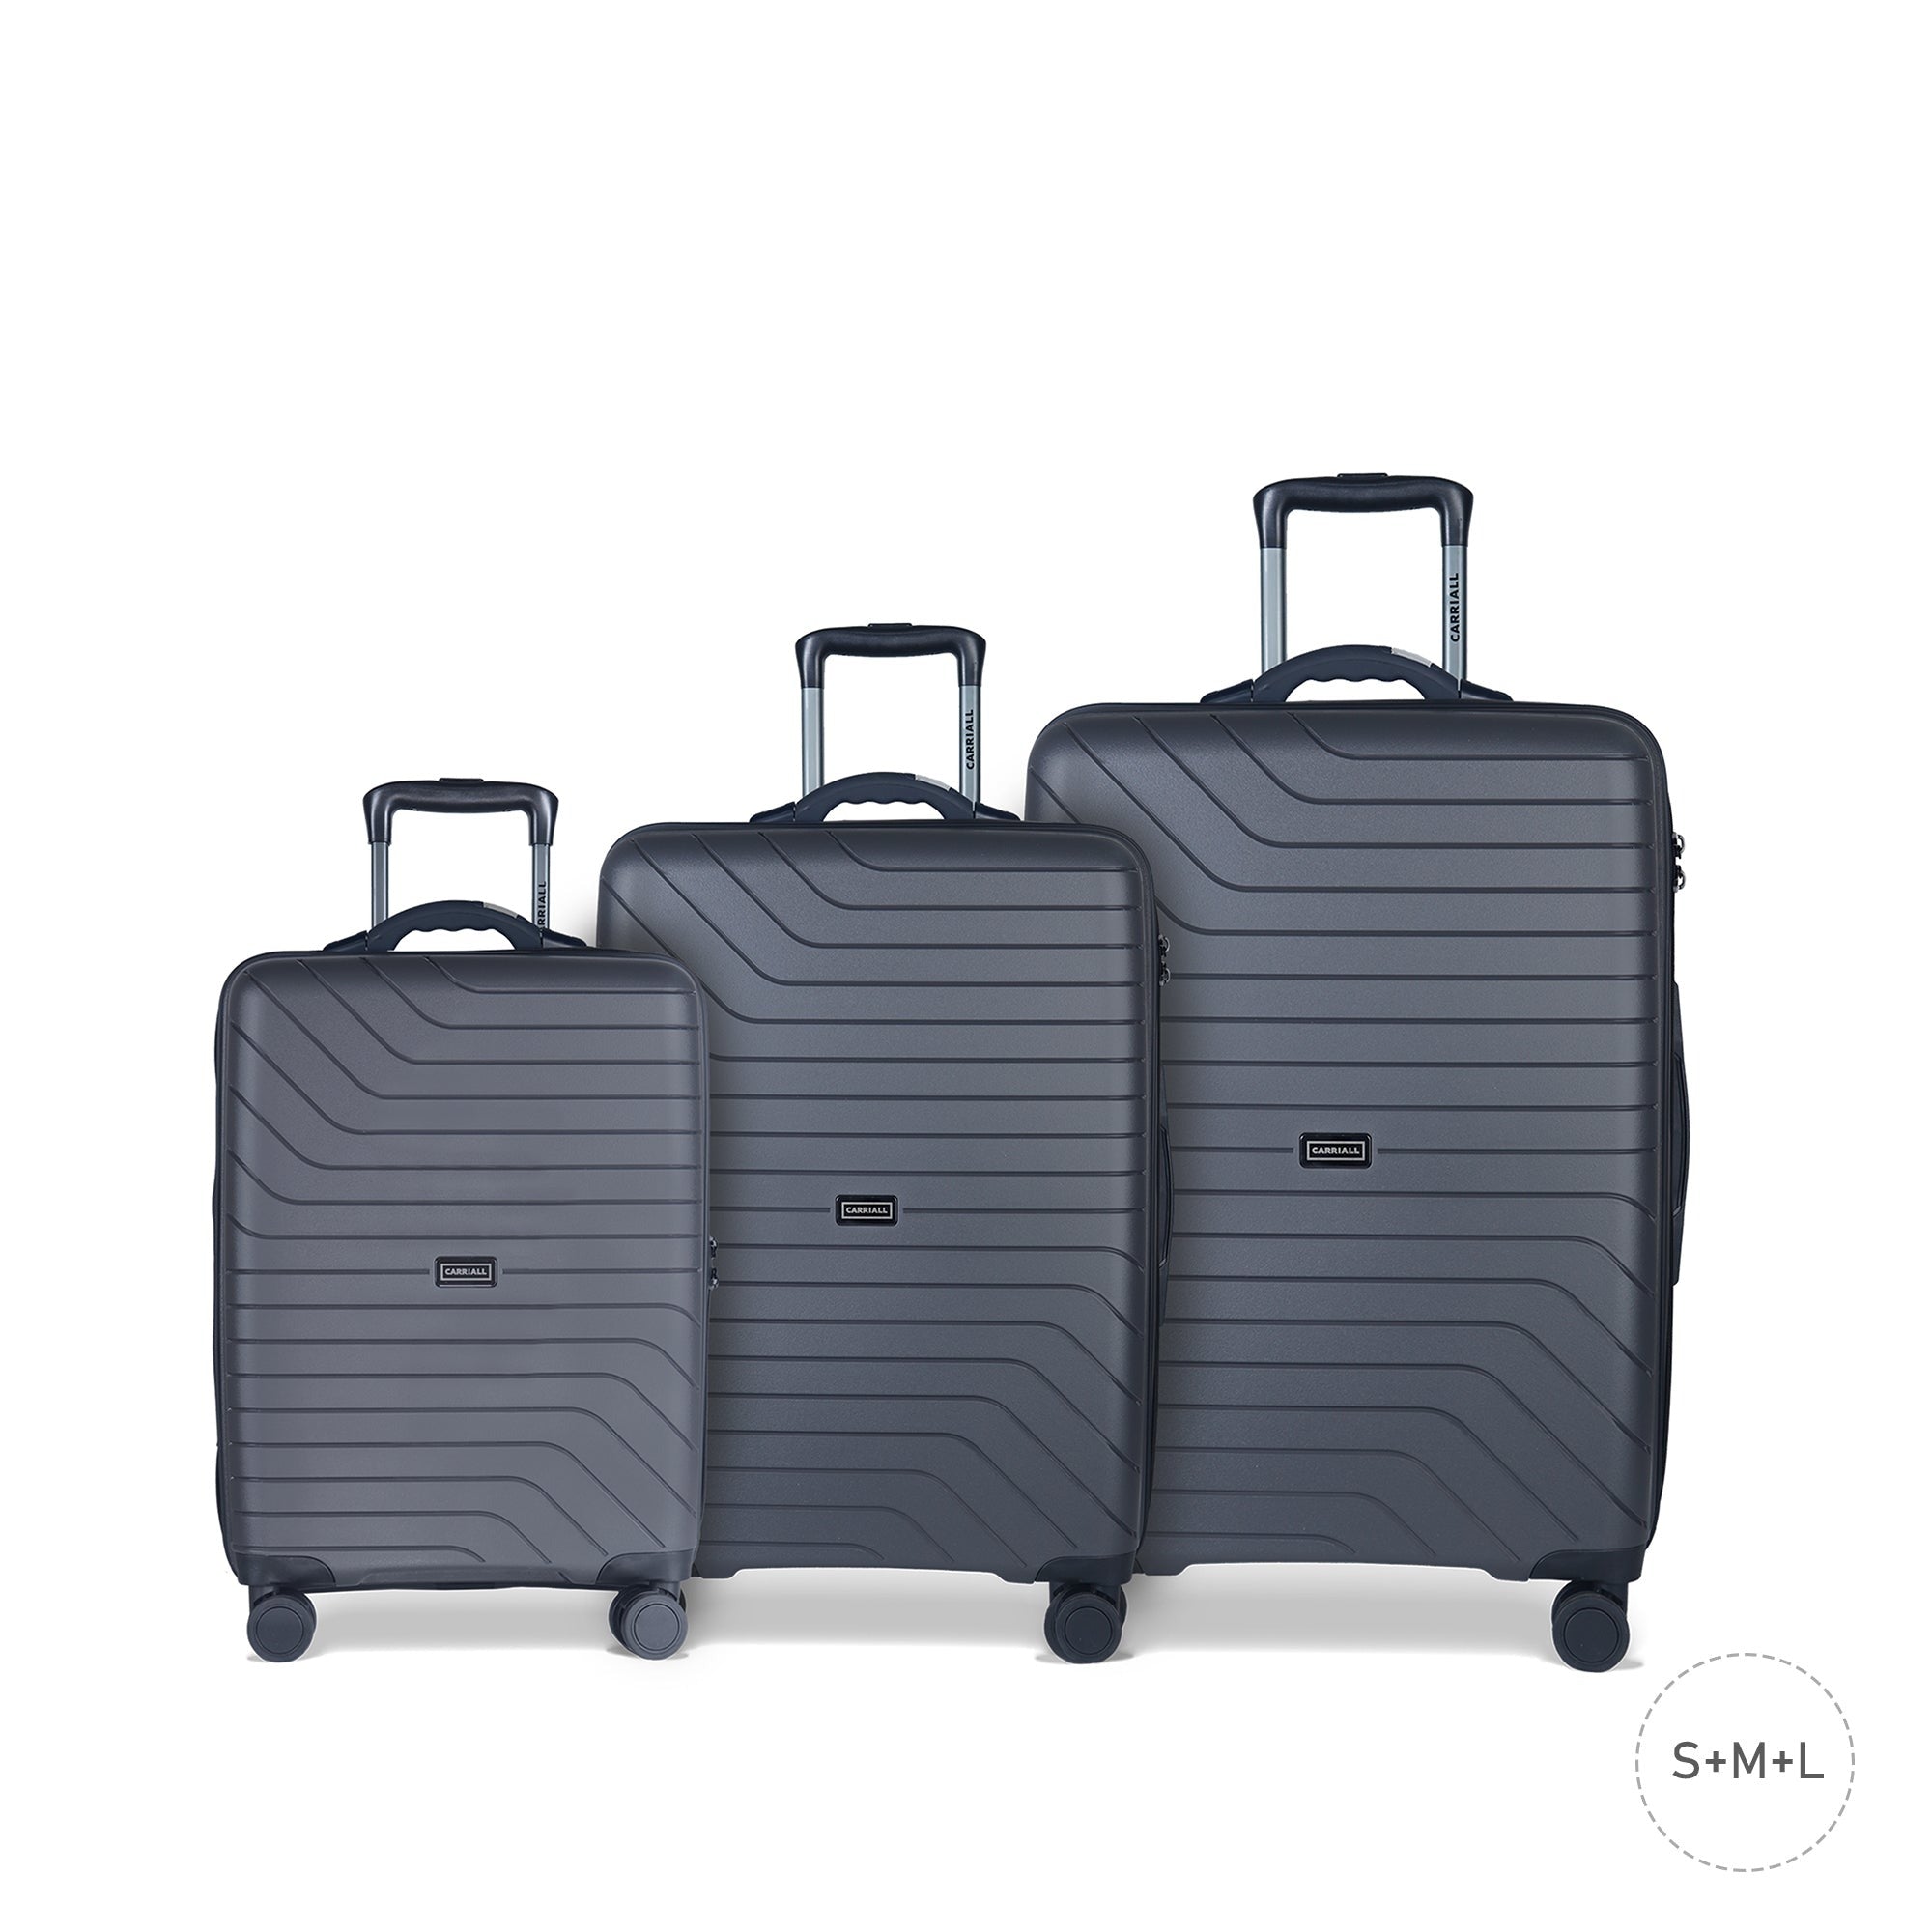 Groove Smart Luggage set of 3